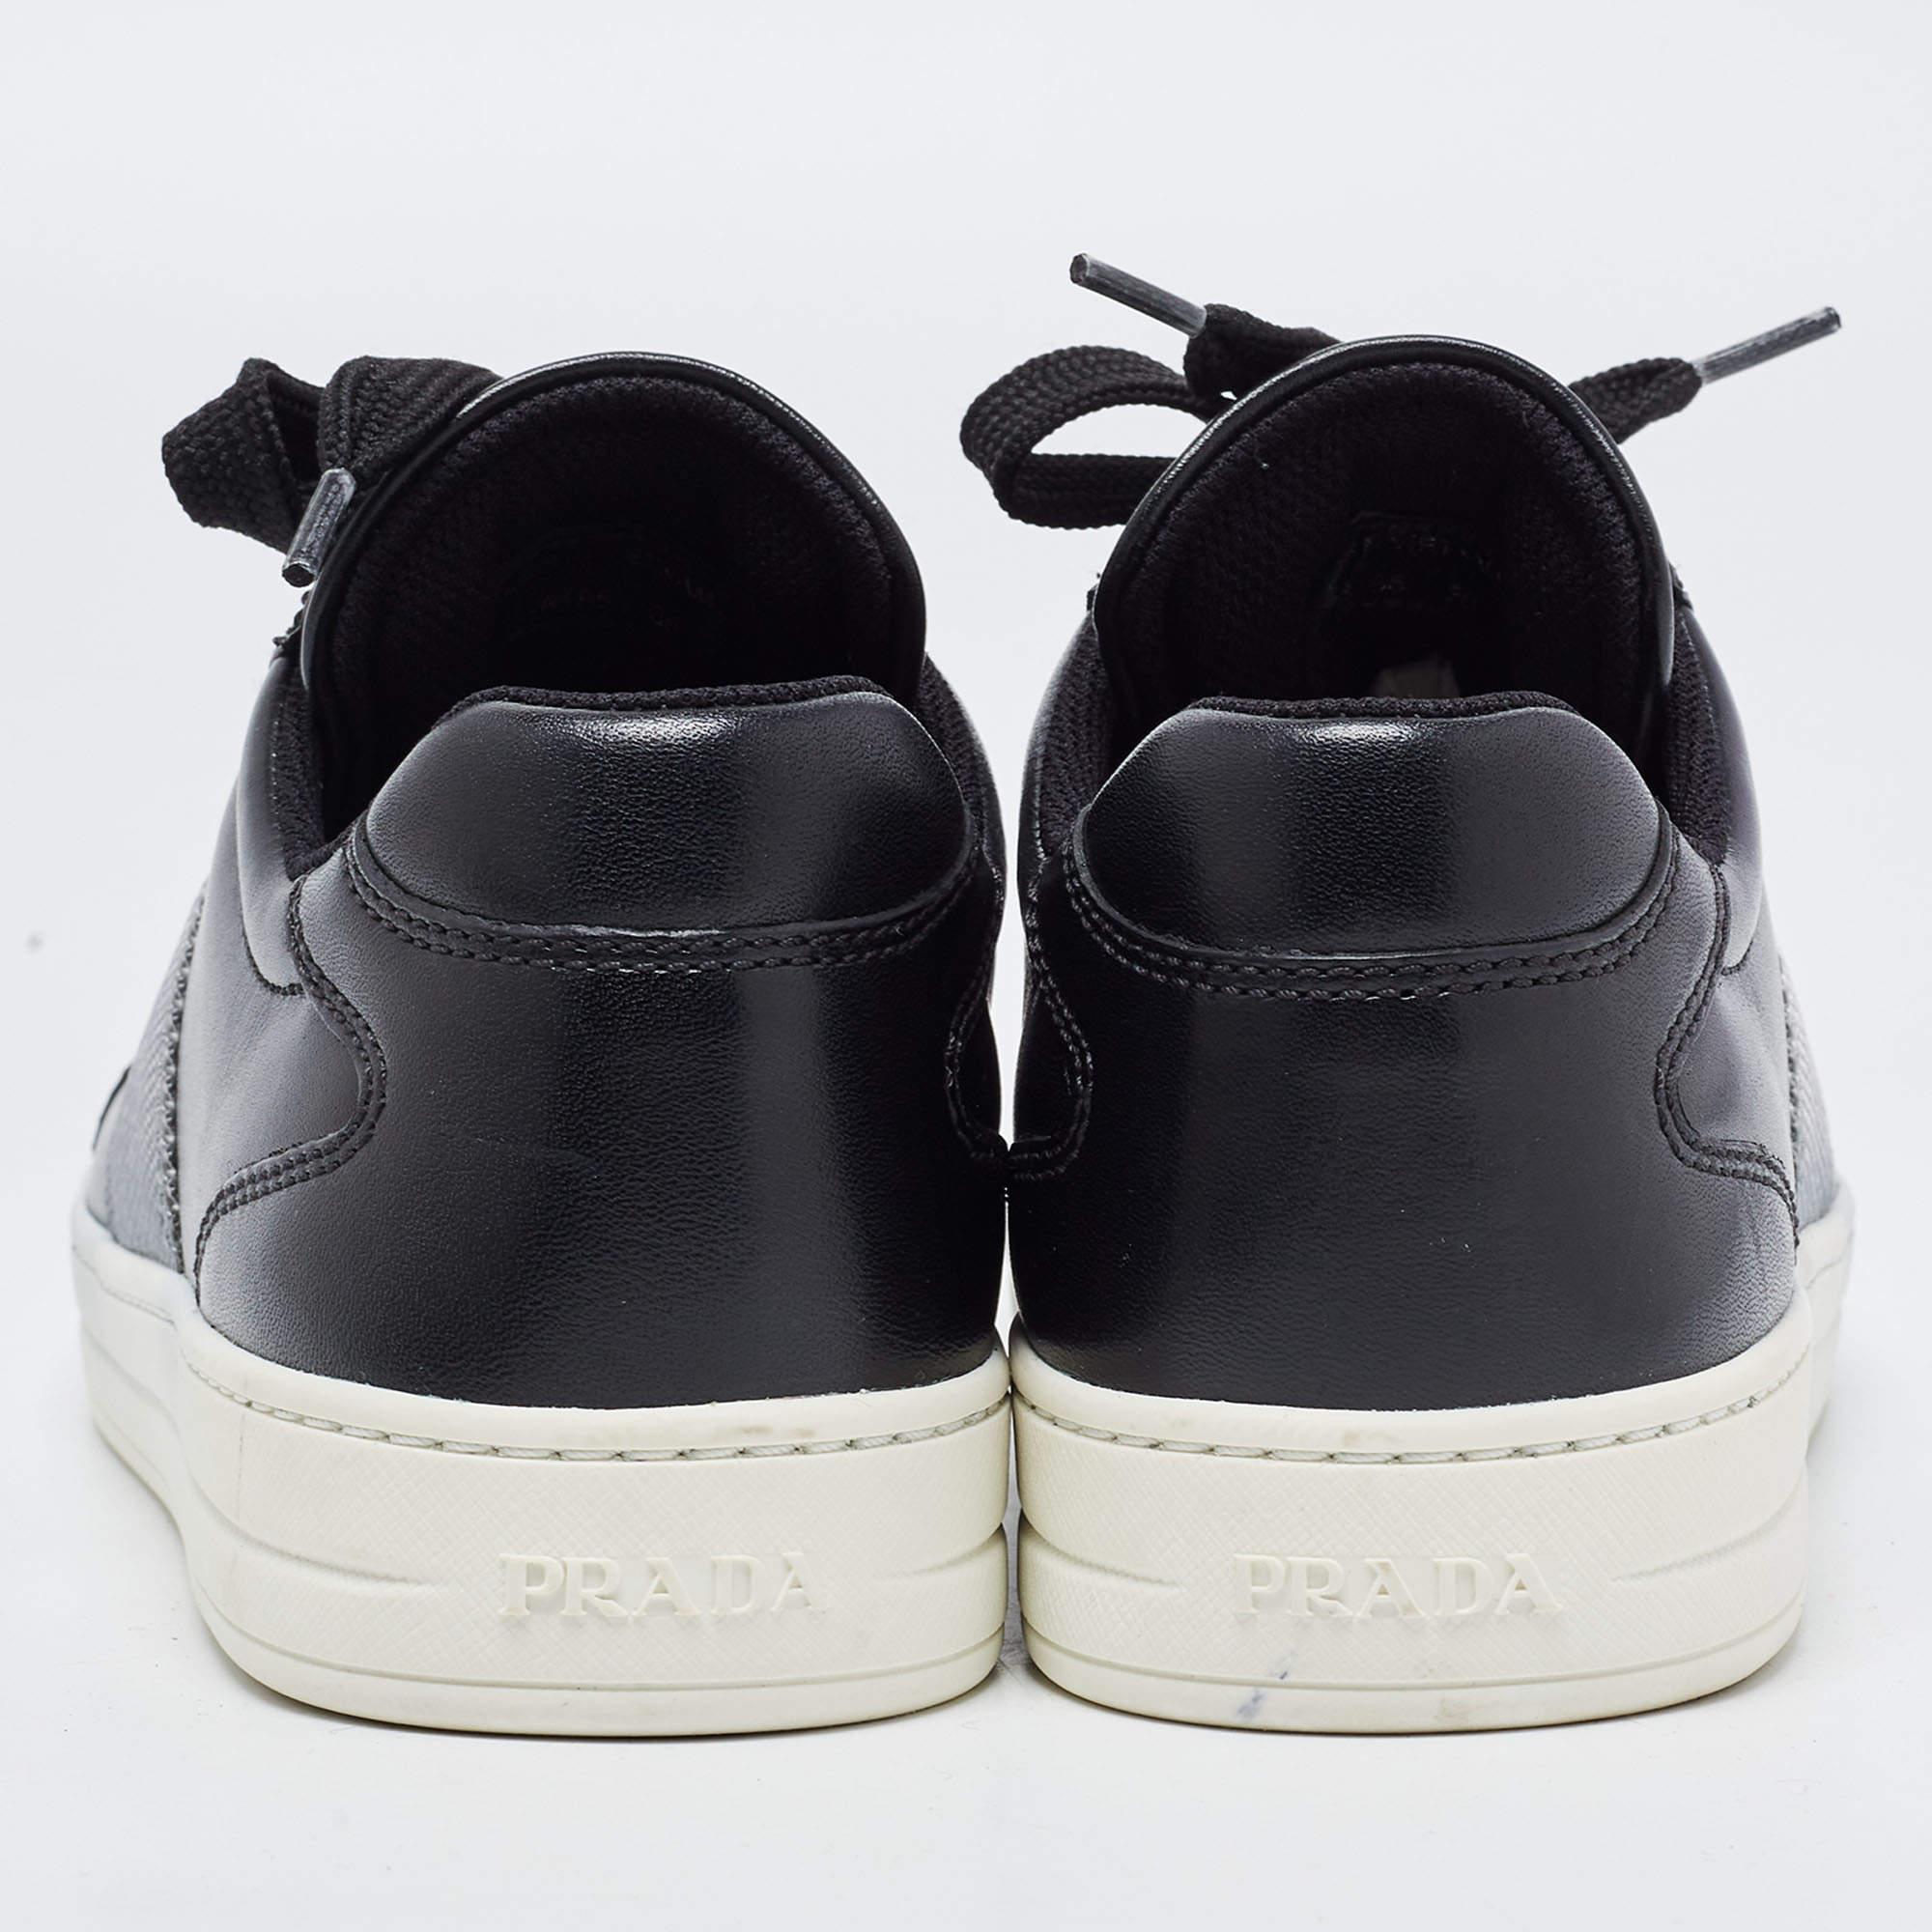 Prada Black Leather Low Top Sneakers Size 38 3